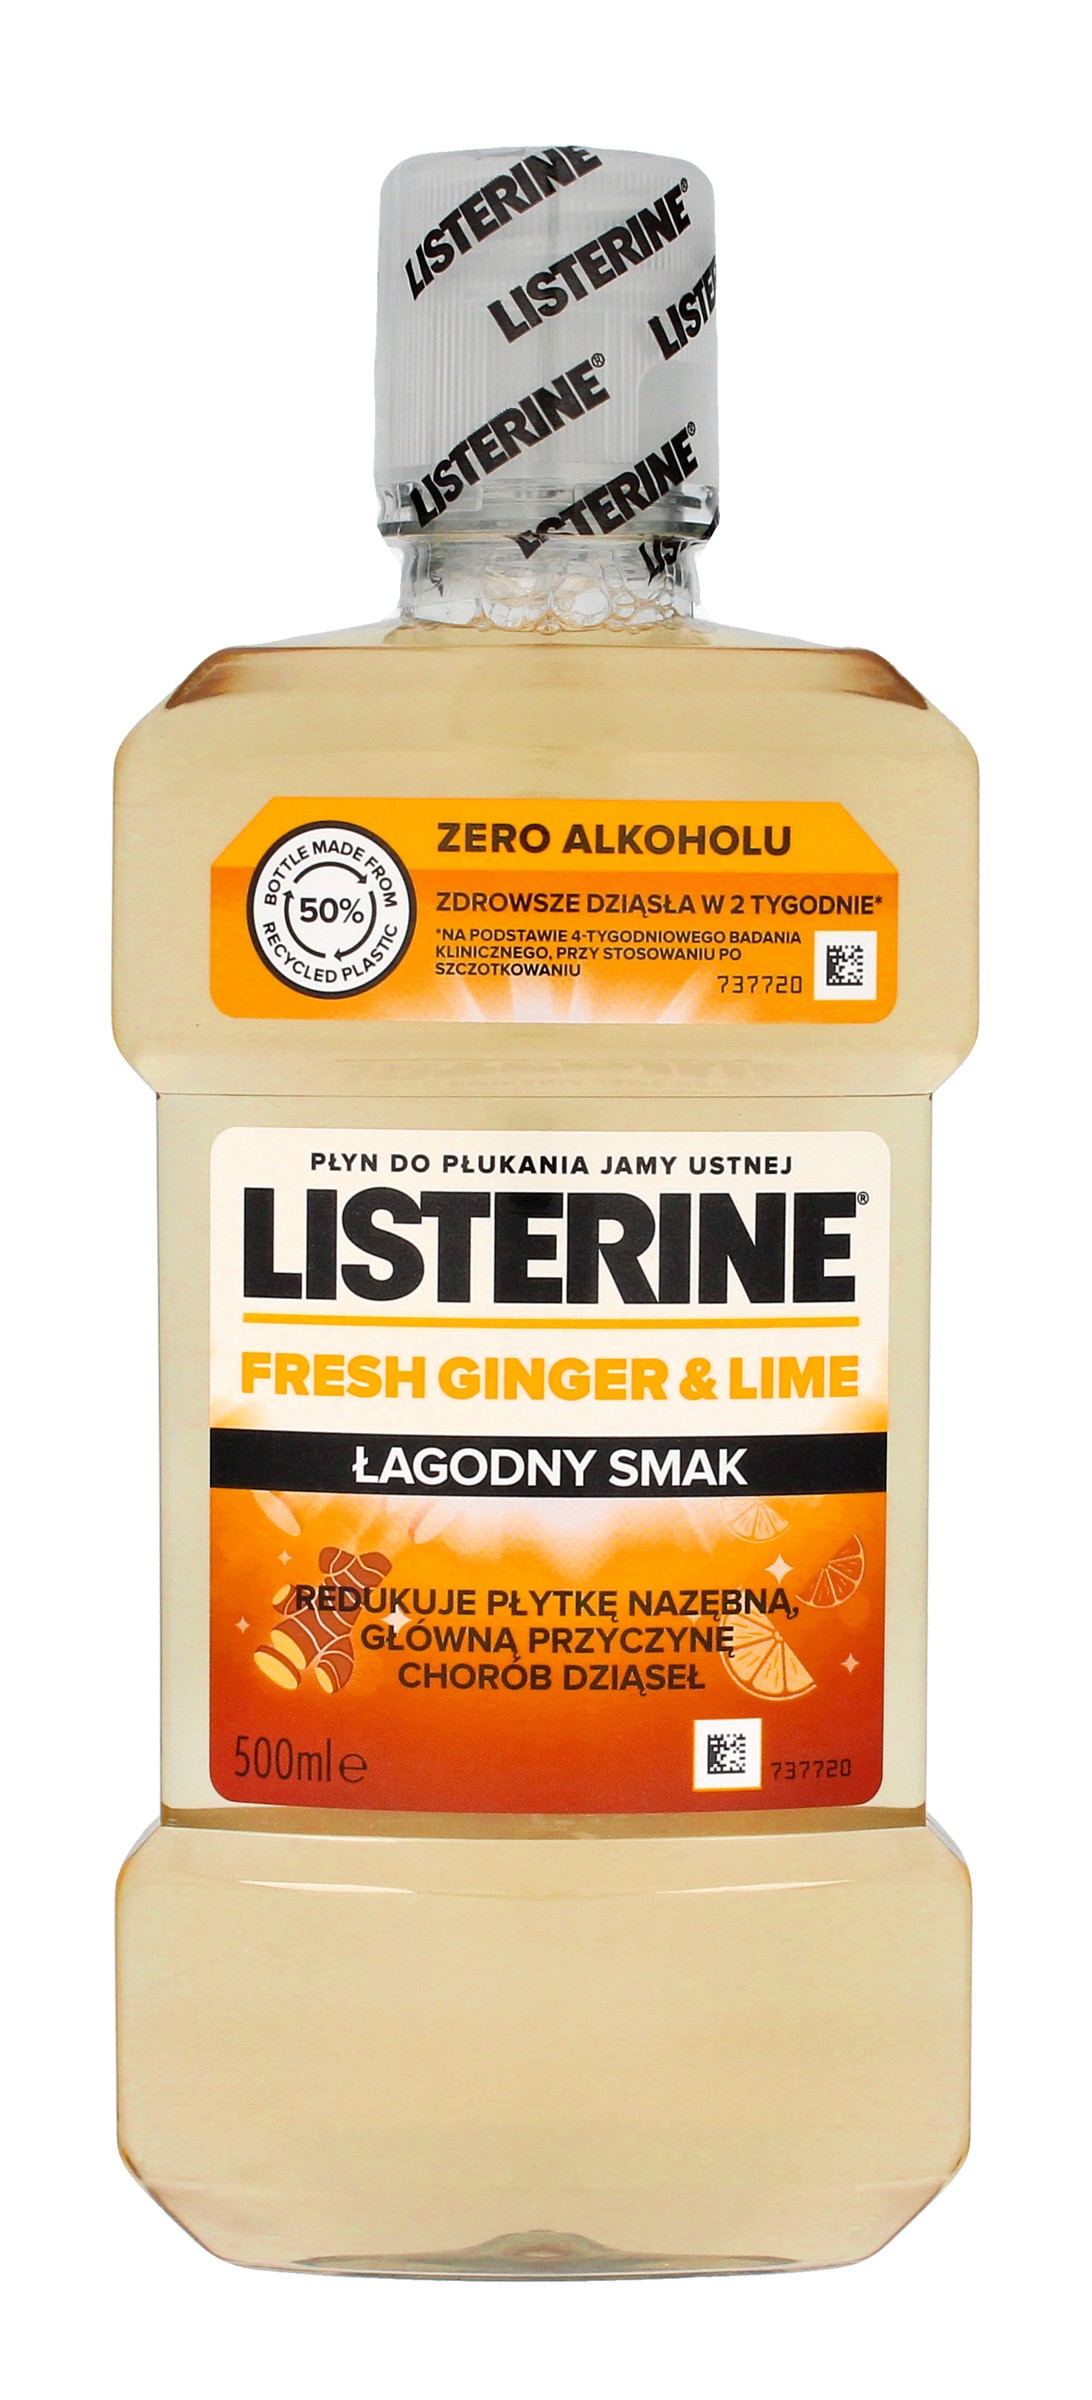 Listerine Ginger & Lime Płyn do płukania jamy ustnej Łagodny Smak  500ml